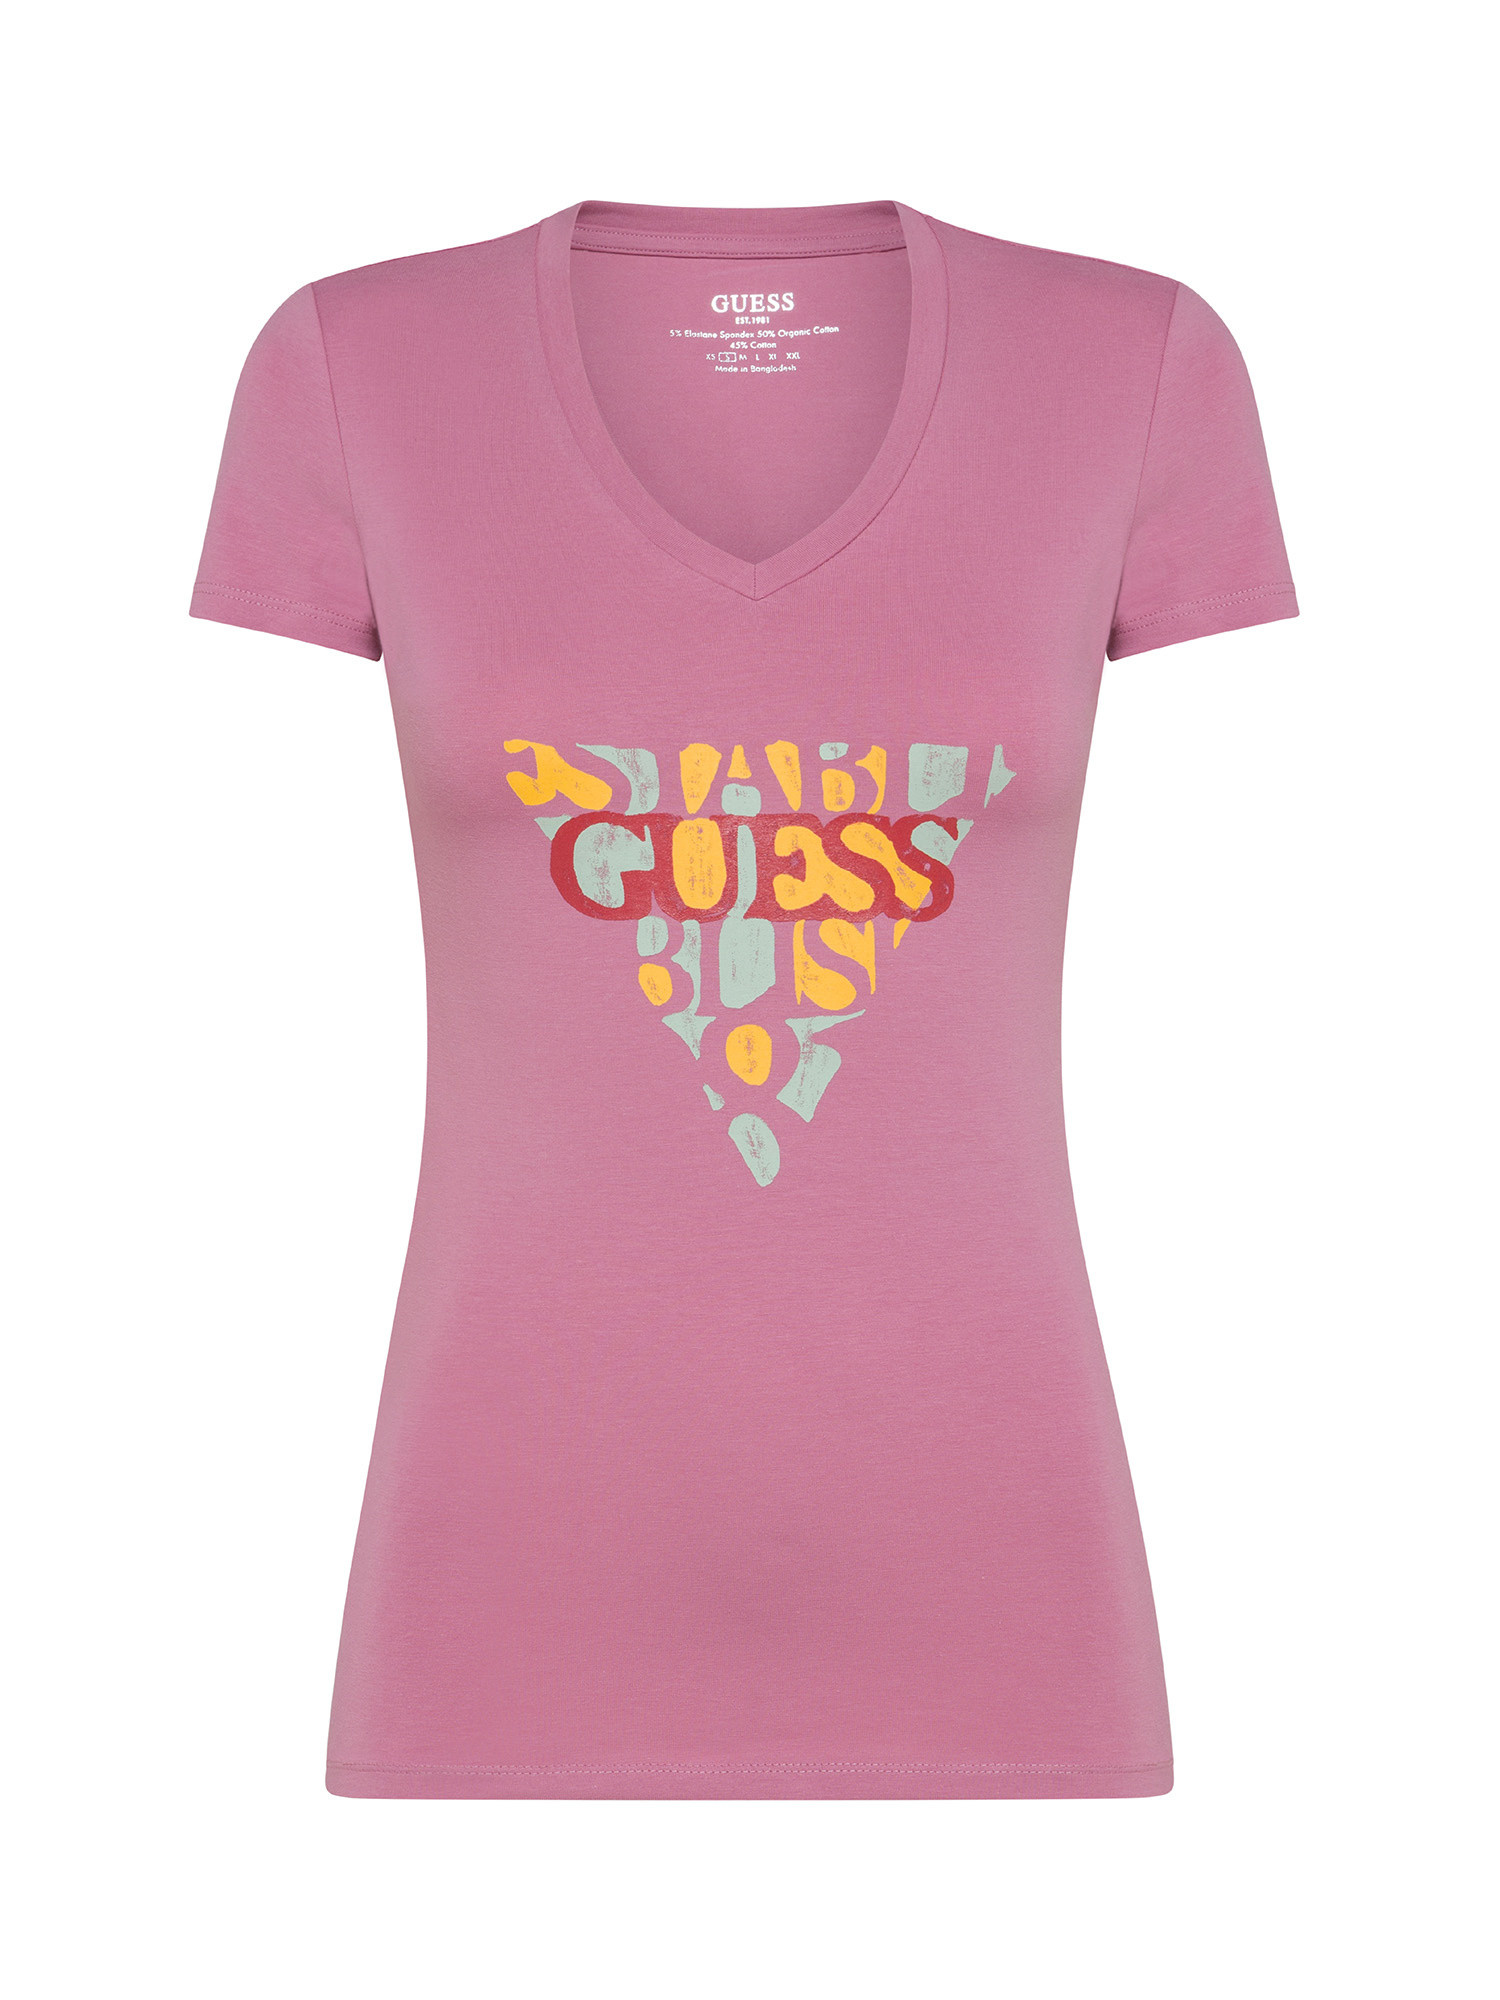 Guess - Slim fit logo T-shirt, Pink, large image number 0